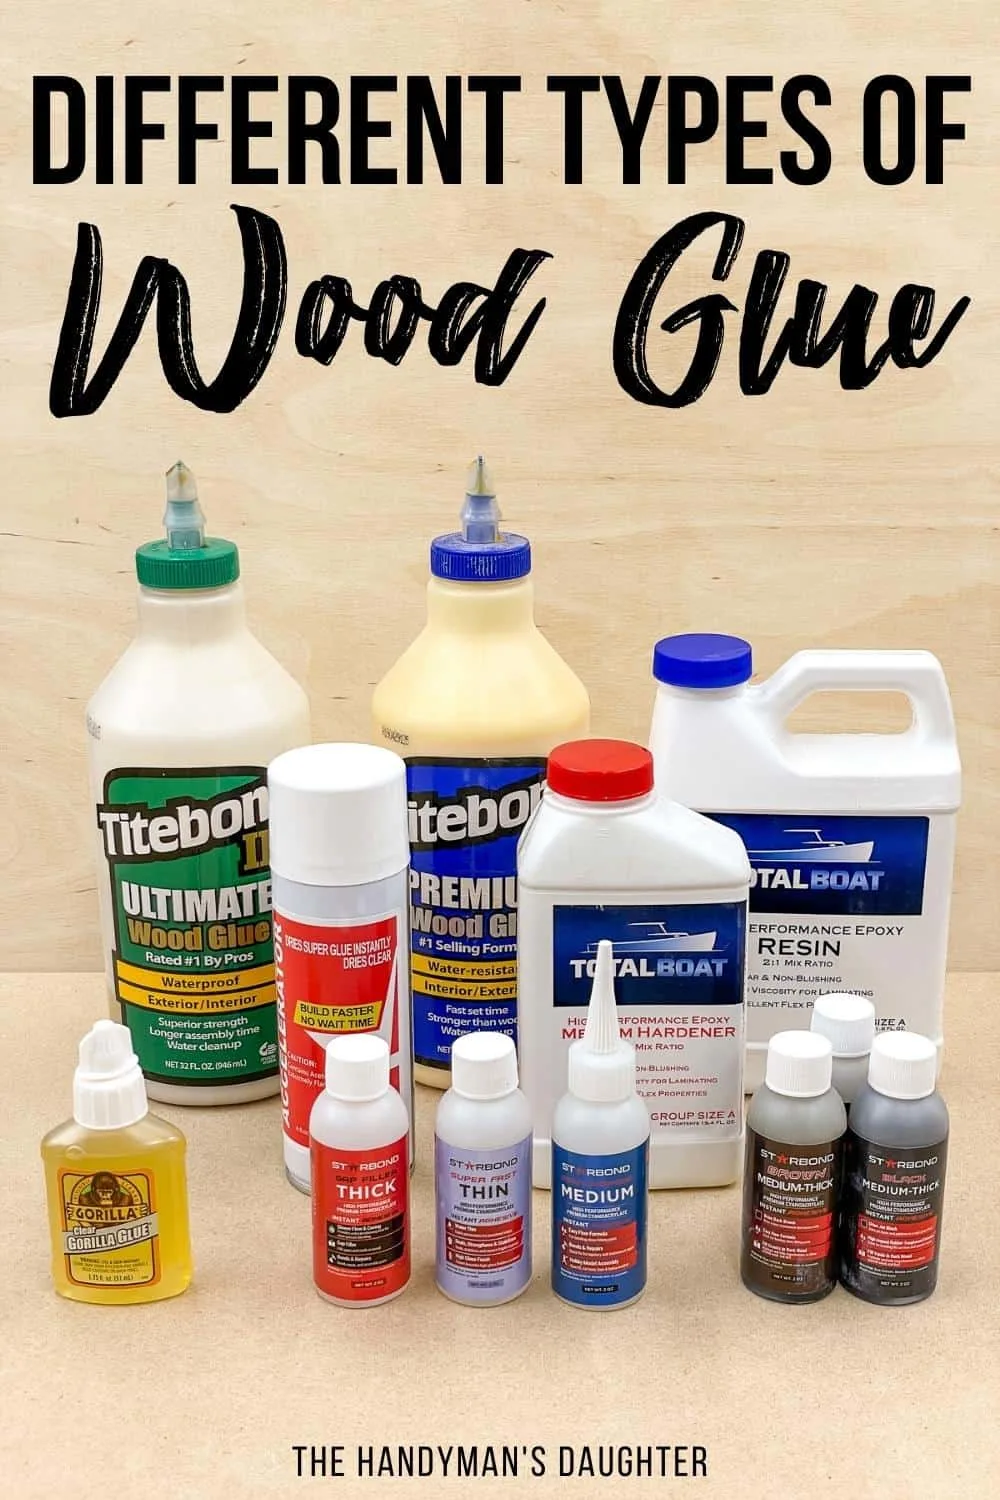 Gorilla Wood Glue Off-White Interior/Exterior Wood Adhesive (Actual Net  Contents: 8-fl oz) at